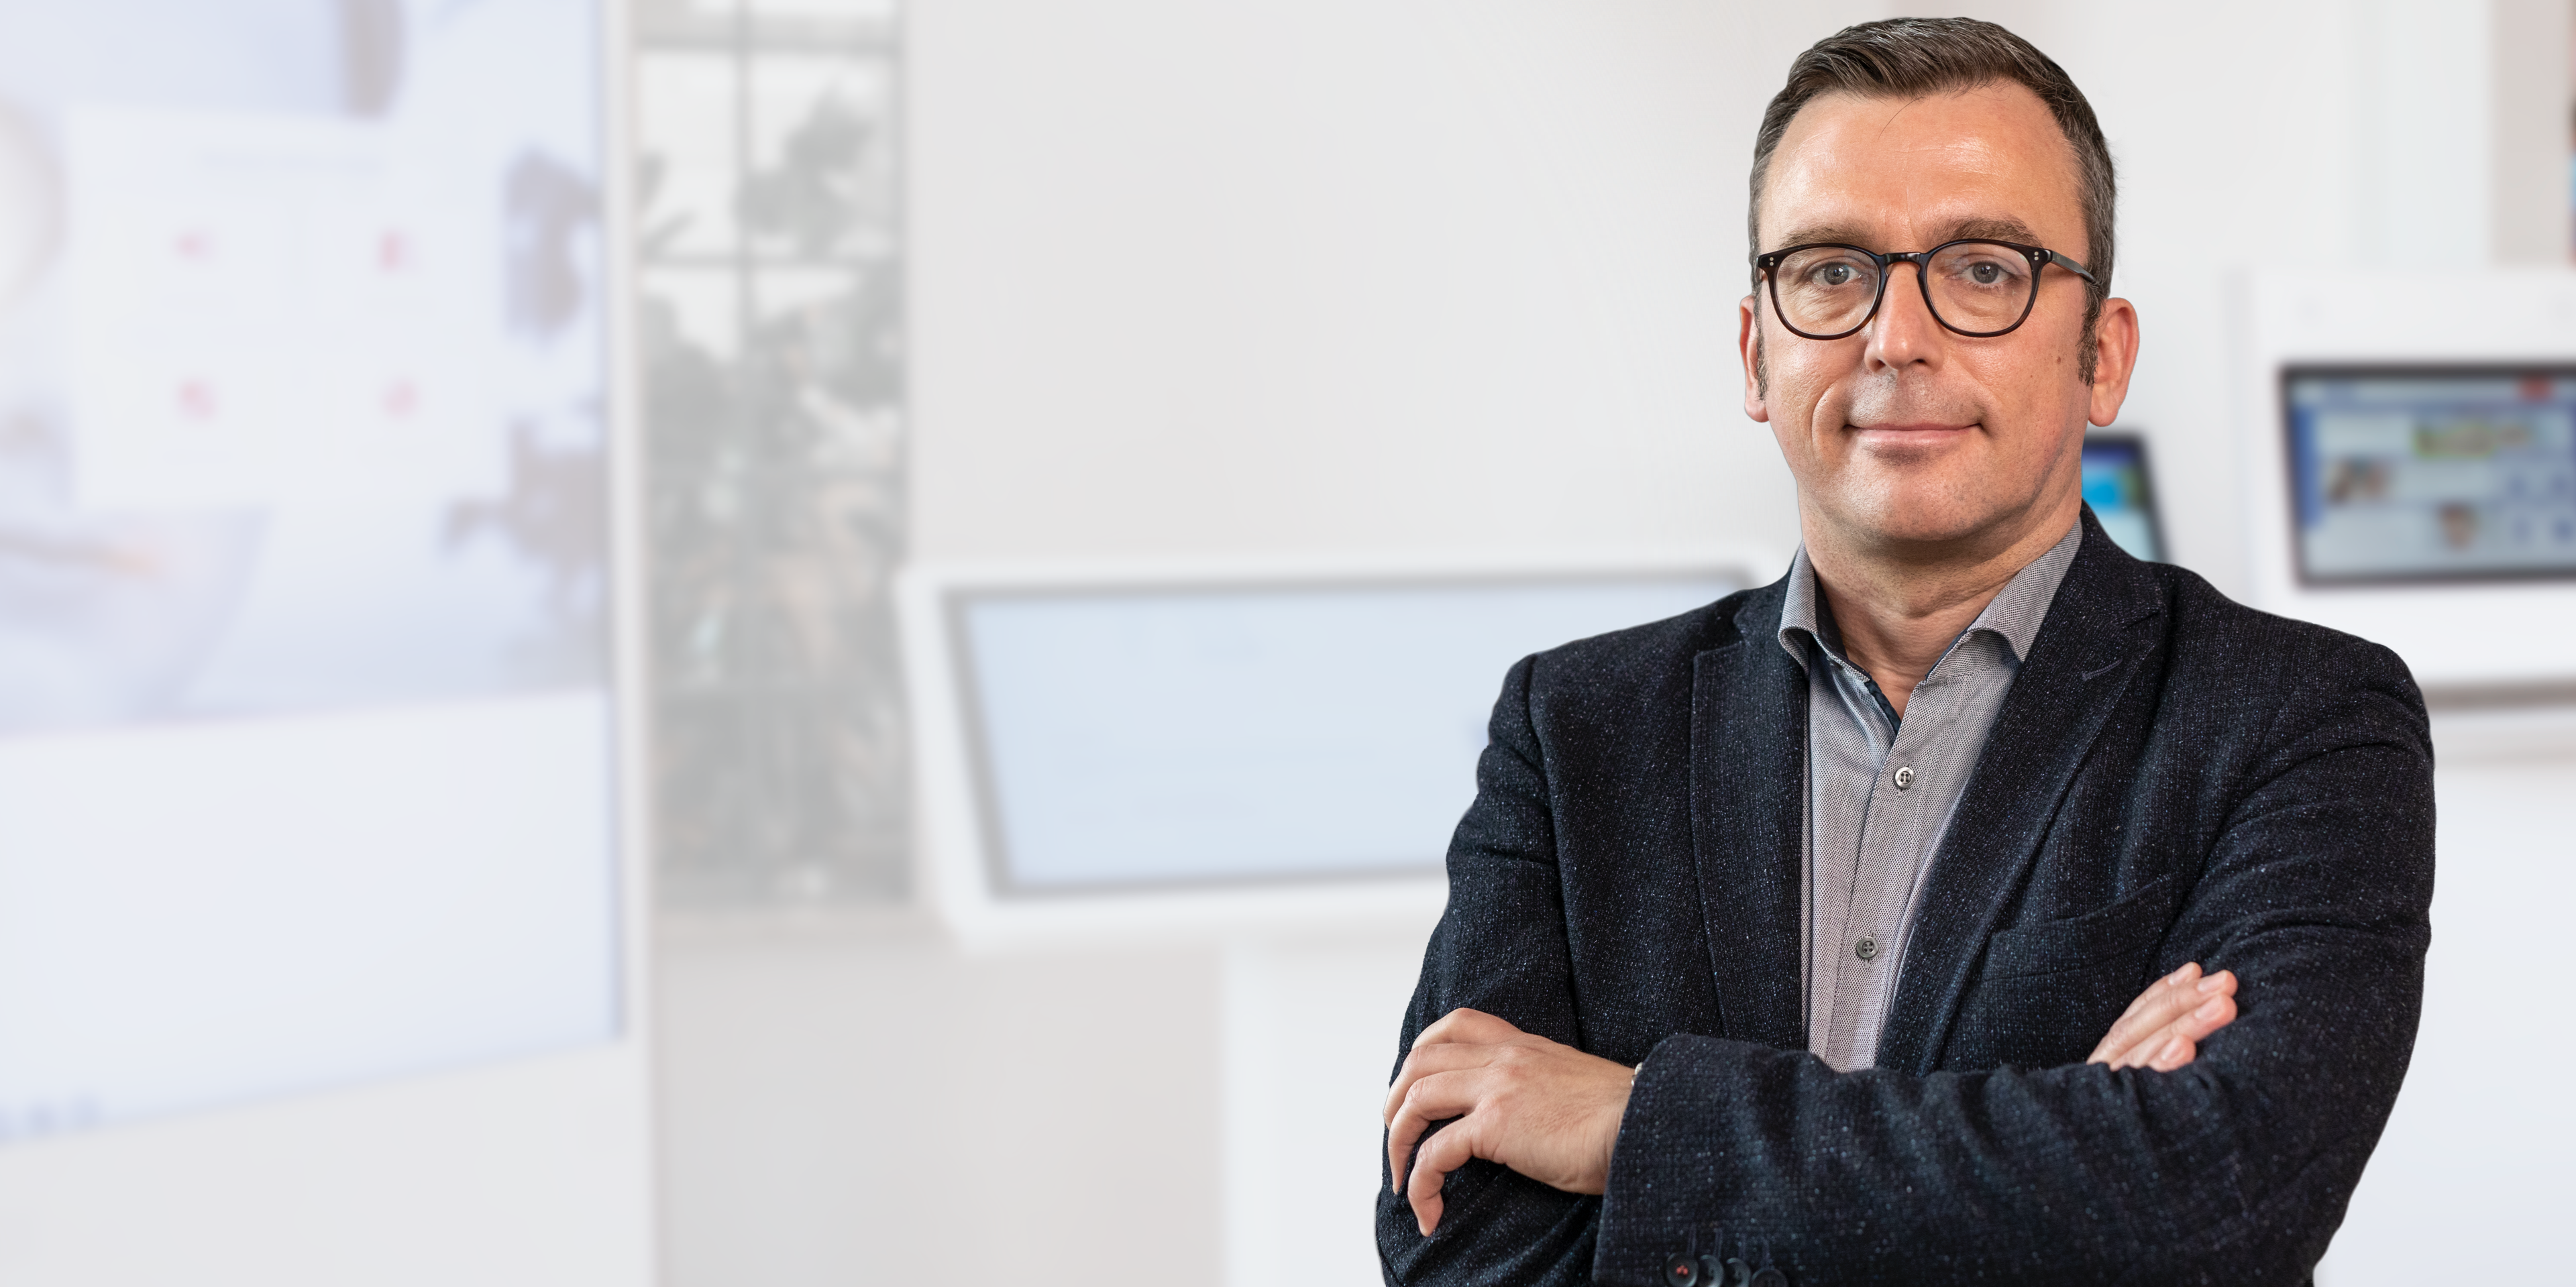 Kunden-Referenz: Thomas Sepp, CEO der eKiosk GmbH